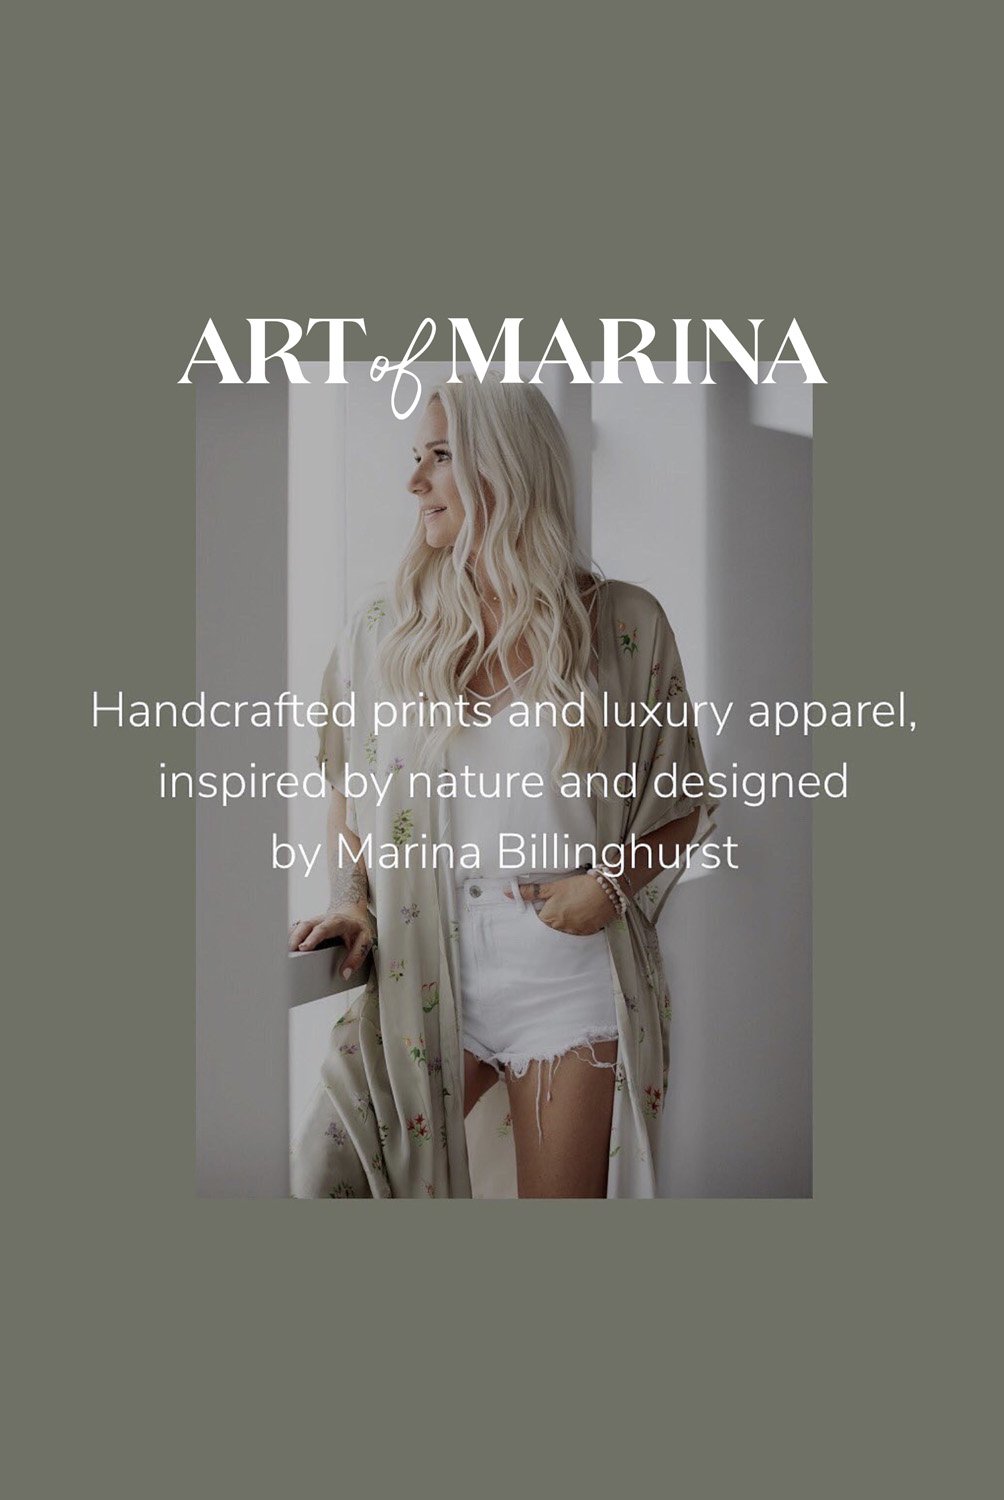 Typographic logo design and tagline for watercolour artist and fashion designer, Art of Marina